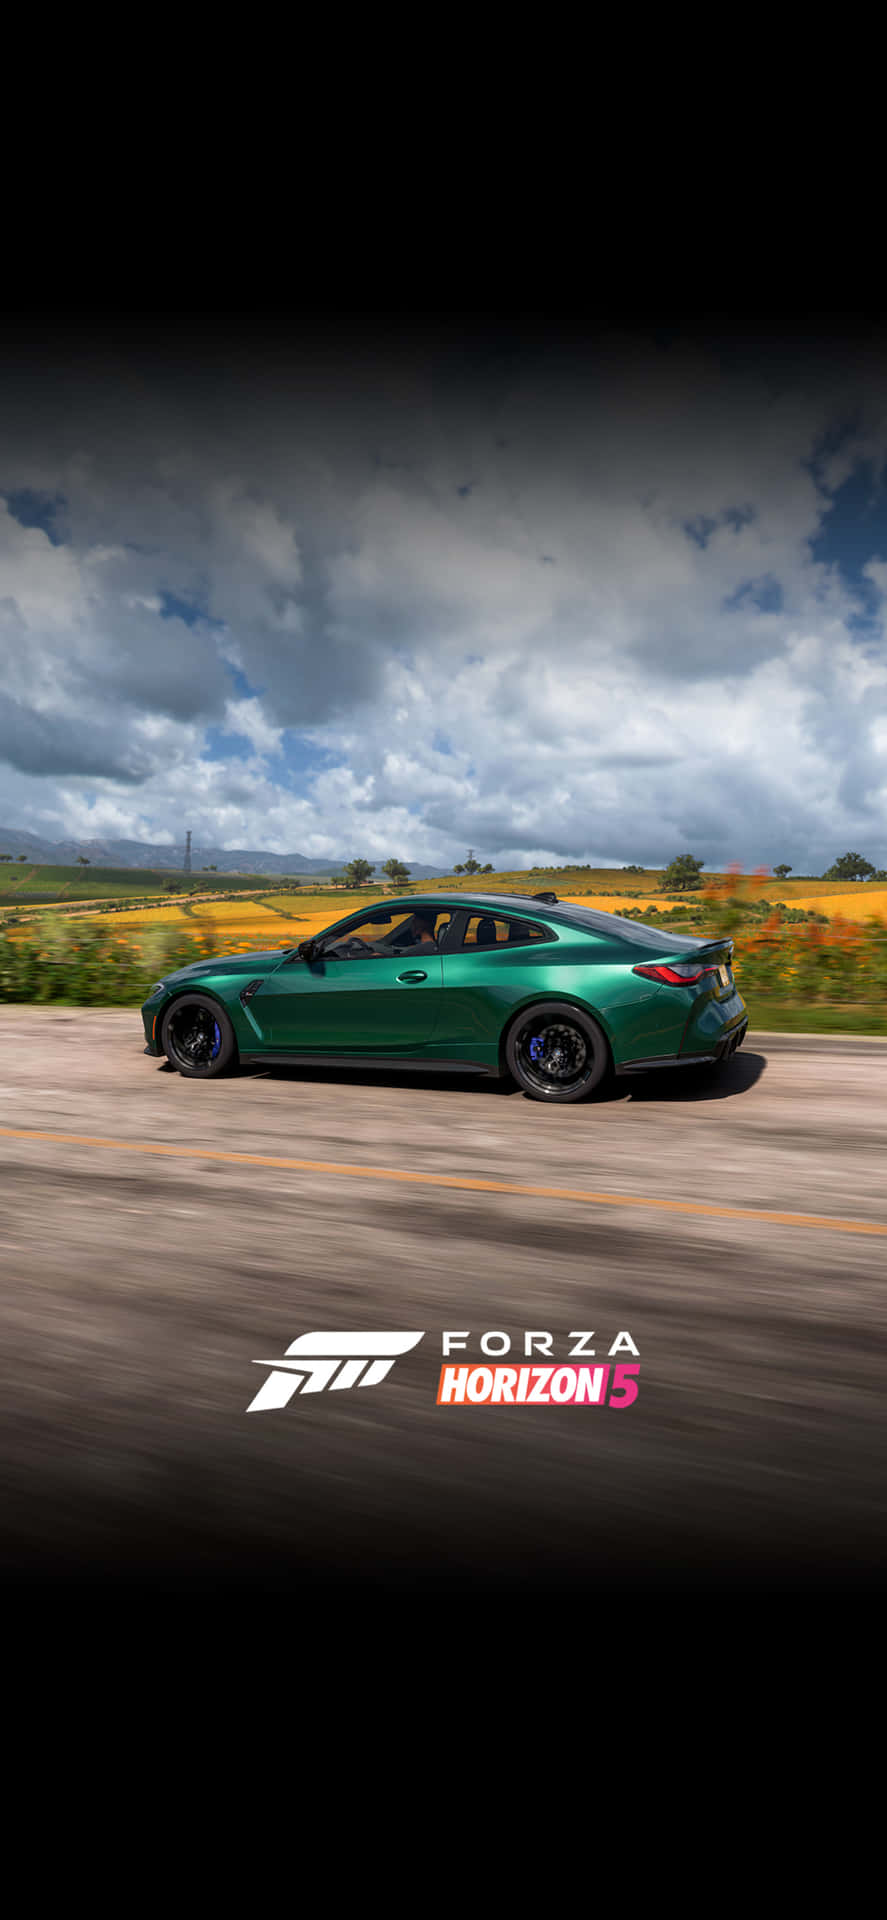 Fondode Pantalla Forza Motorsport 7 De Iphone X Con Un Bmw M4 Verde.